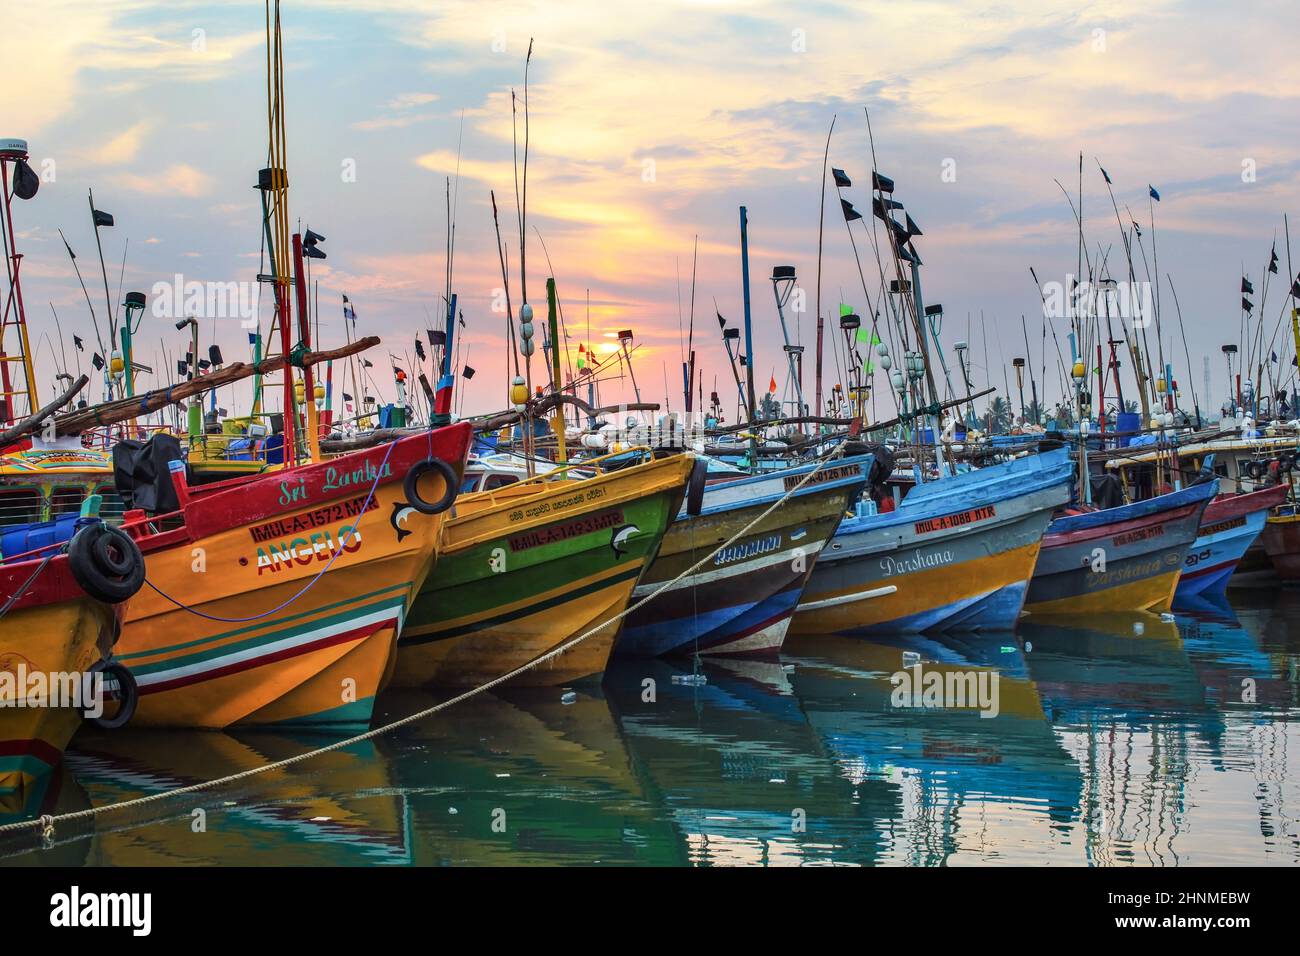 Mirissa, Sri Lanka - April 14, 2017: Colorful boats in Mirissa port with morning sun rising in the background. Stock Photo